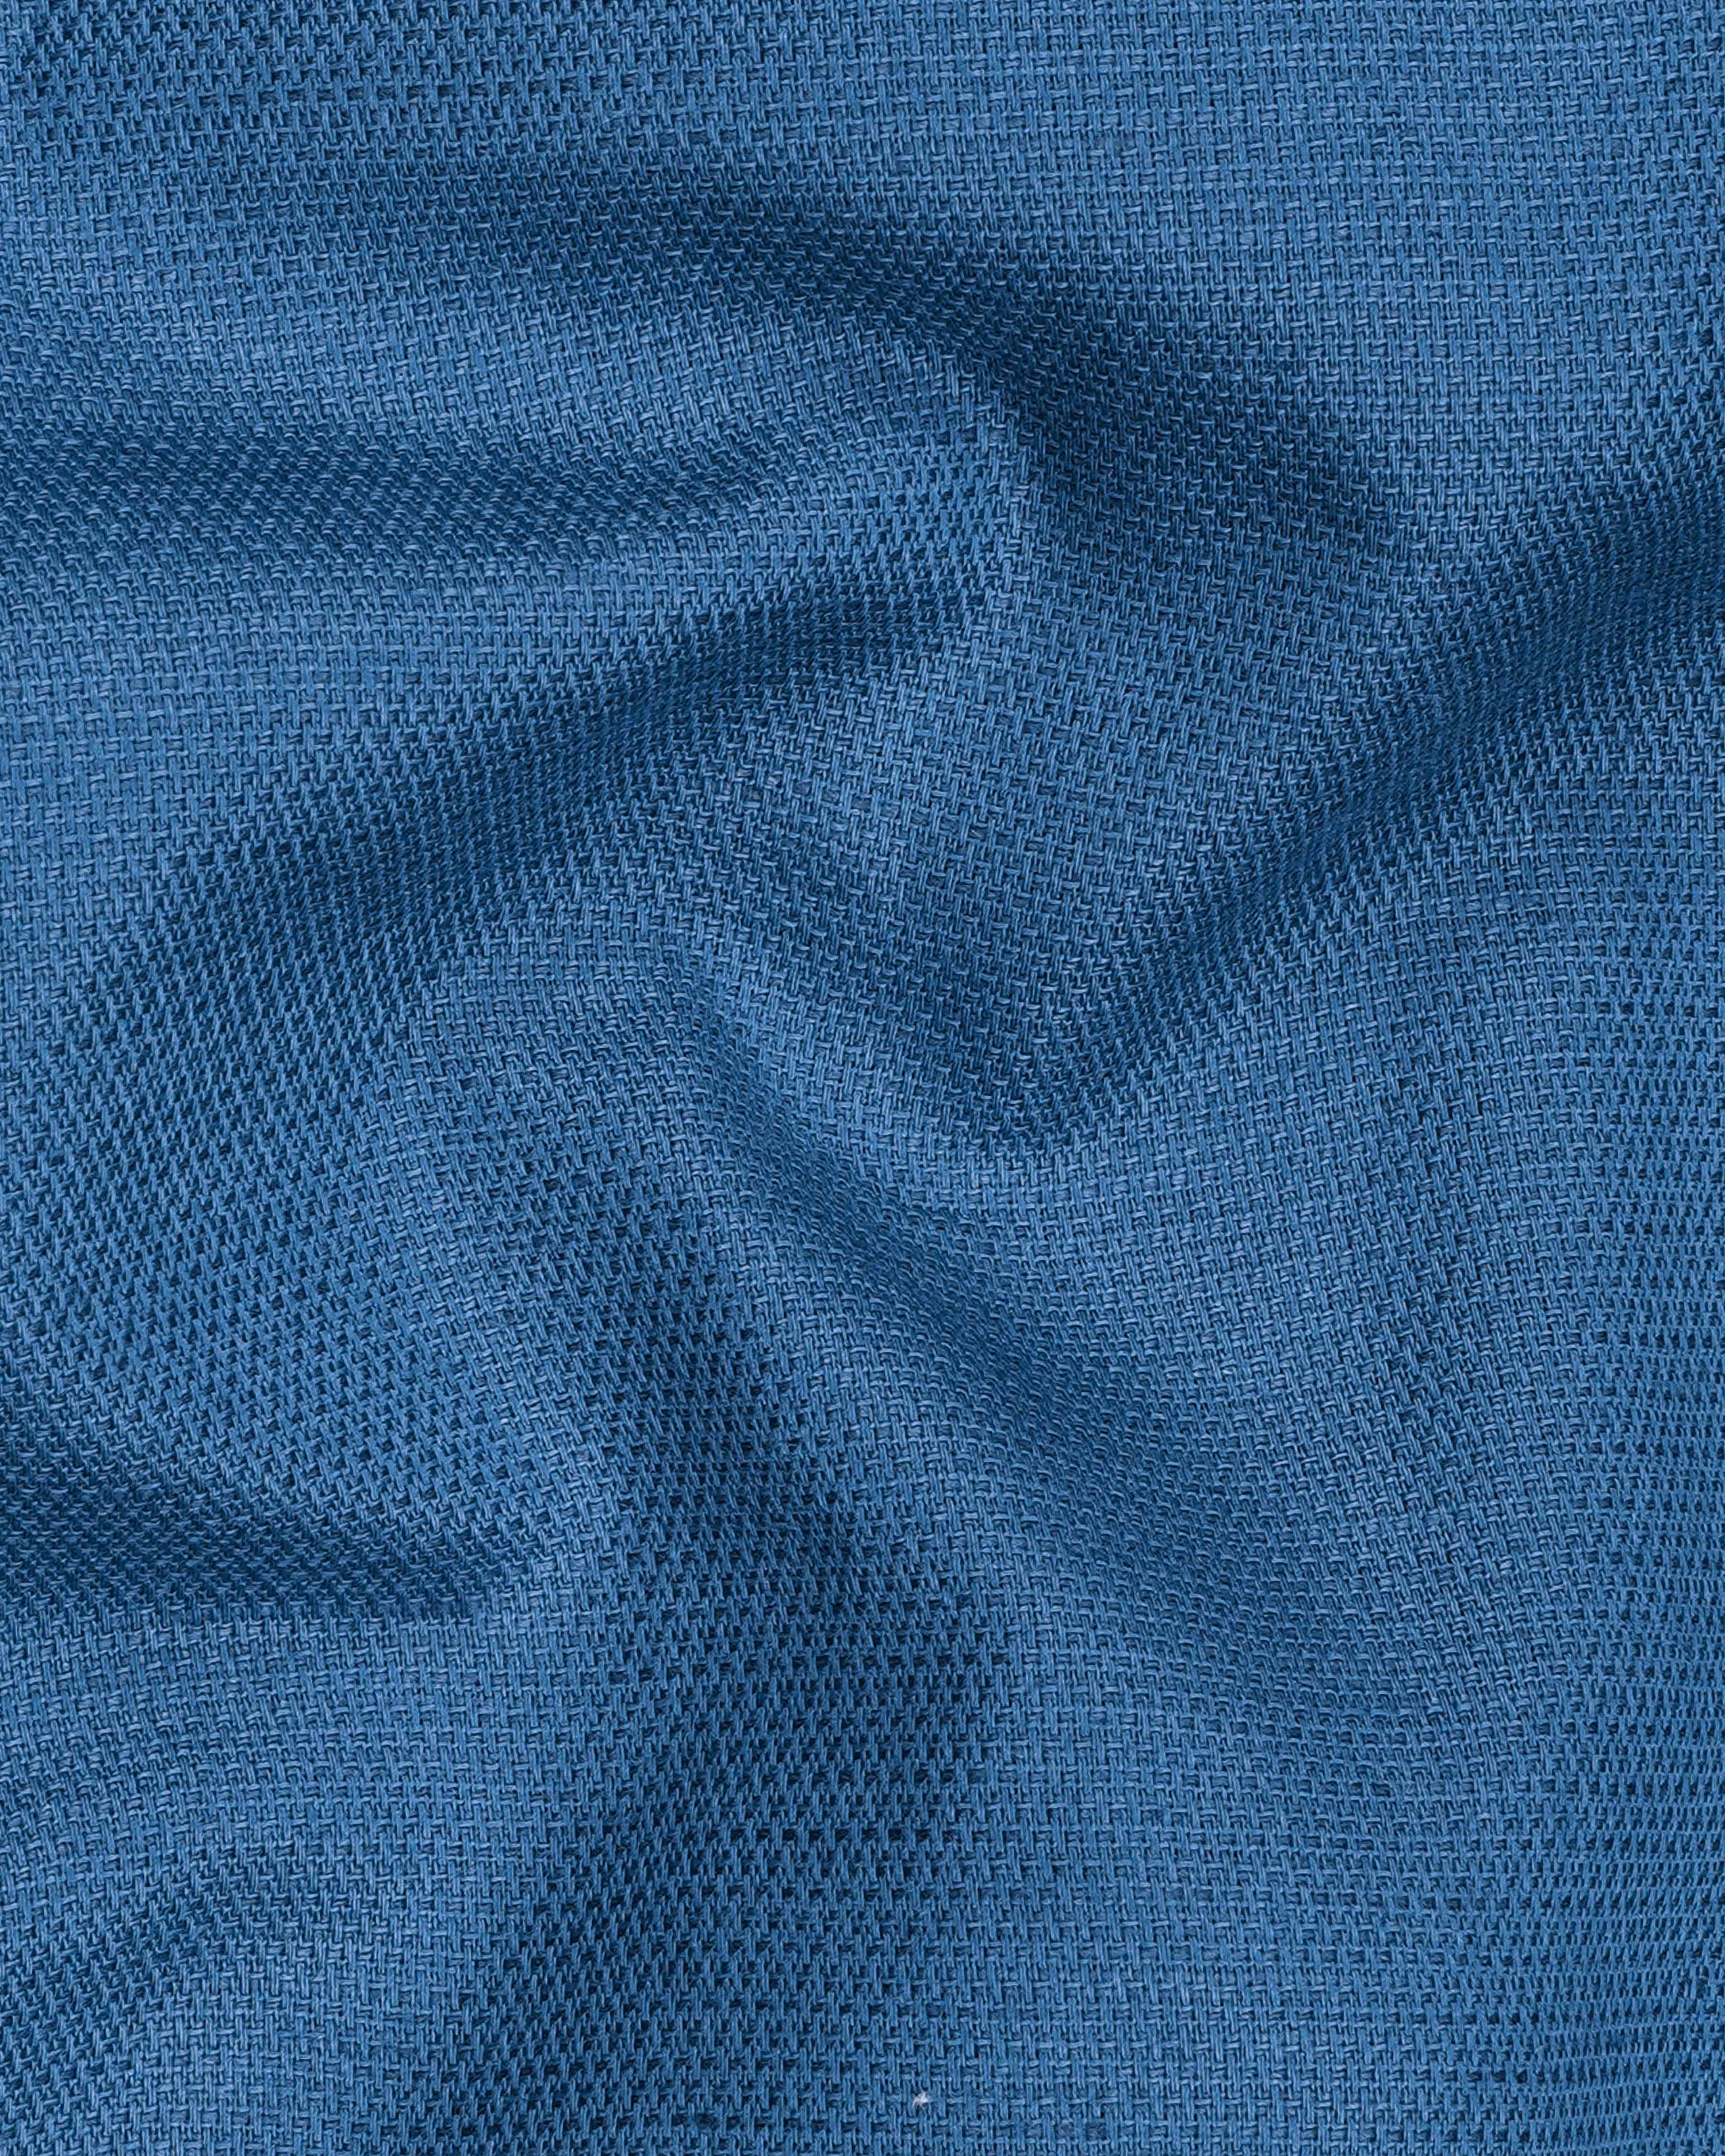 Chathams Blue Dobby Textured Premium Giza Cotton Shirt 8431-BD-BLK-38, 8431-BD-BLK-H-38, 8431-BD-BLK-39,8431-BD-BLK-H-39, 8431-BD-BLK-40, 8431-BD-BLK-H-40, 8431-BD-BLK-42, 8431-BD-BLK-H-42, 8431-BD-BLK-44, 8431-BD-BLK-H-44, 8431-BD-BLK-46, 8431-BD-BLK-H-46, 8431-BD-BLK-48, 8431-BD-BLK-H-48, 8431-BD-BLK-50, 8431-BD-BLK-H-50, 8431-BD-BLK-52, 8431-BD-BLK-H-52